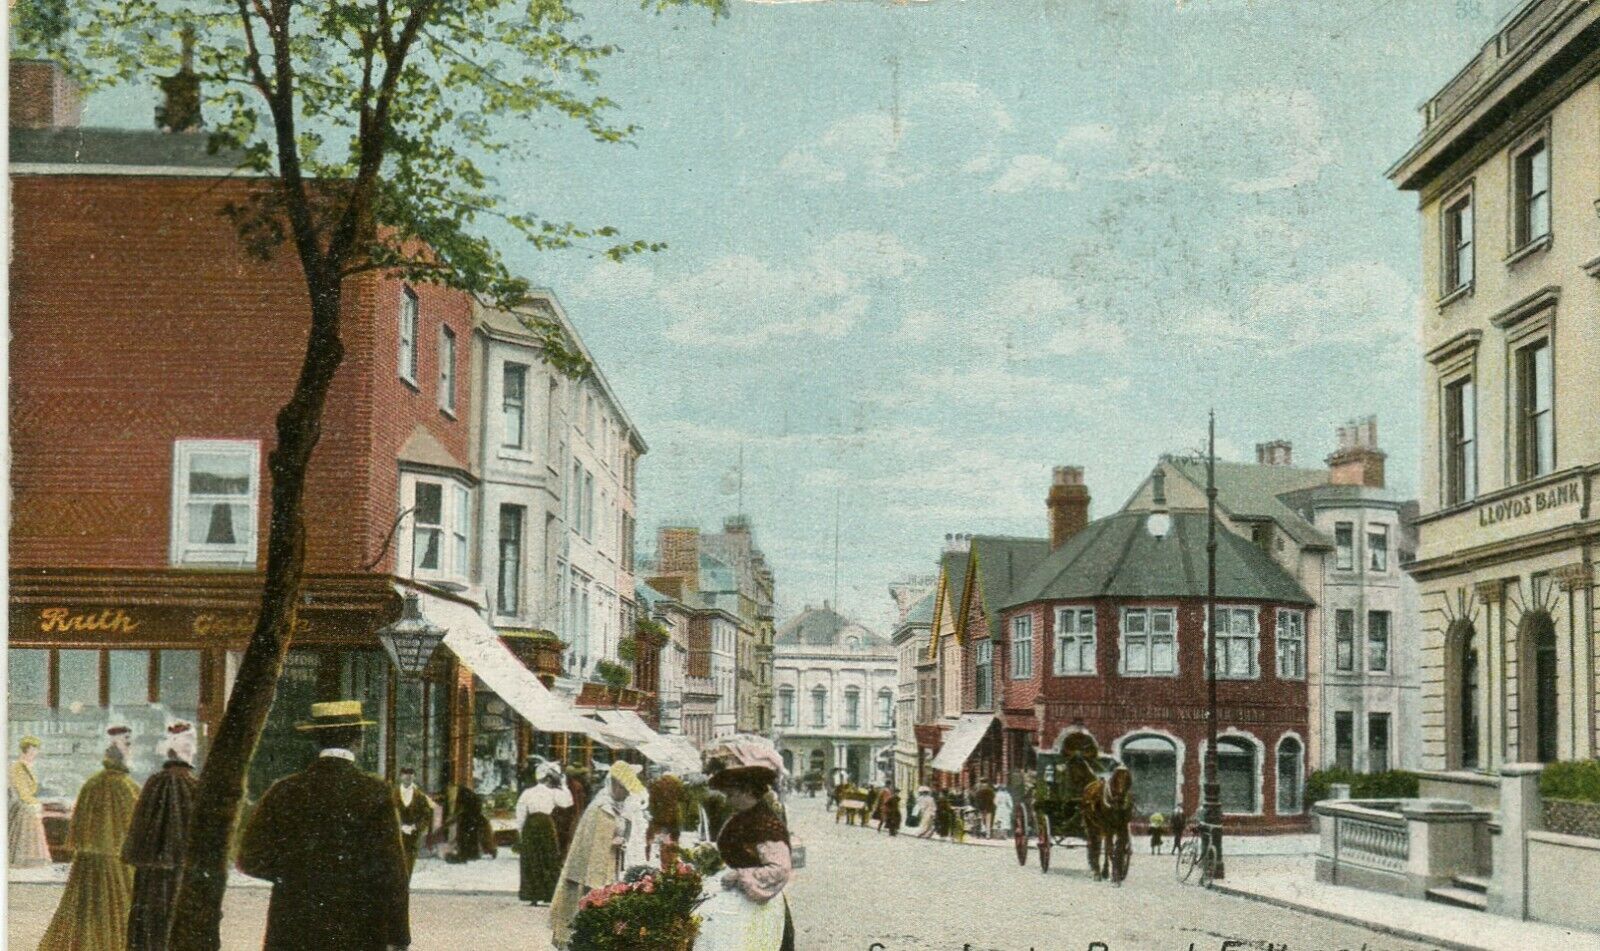 UK Folkestone - Sandgate Road 1906 cover on postcard